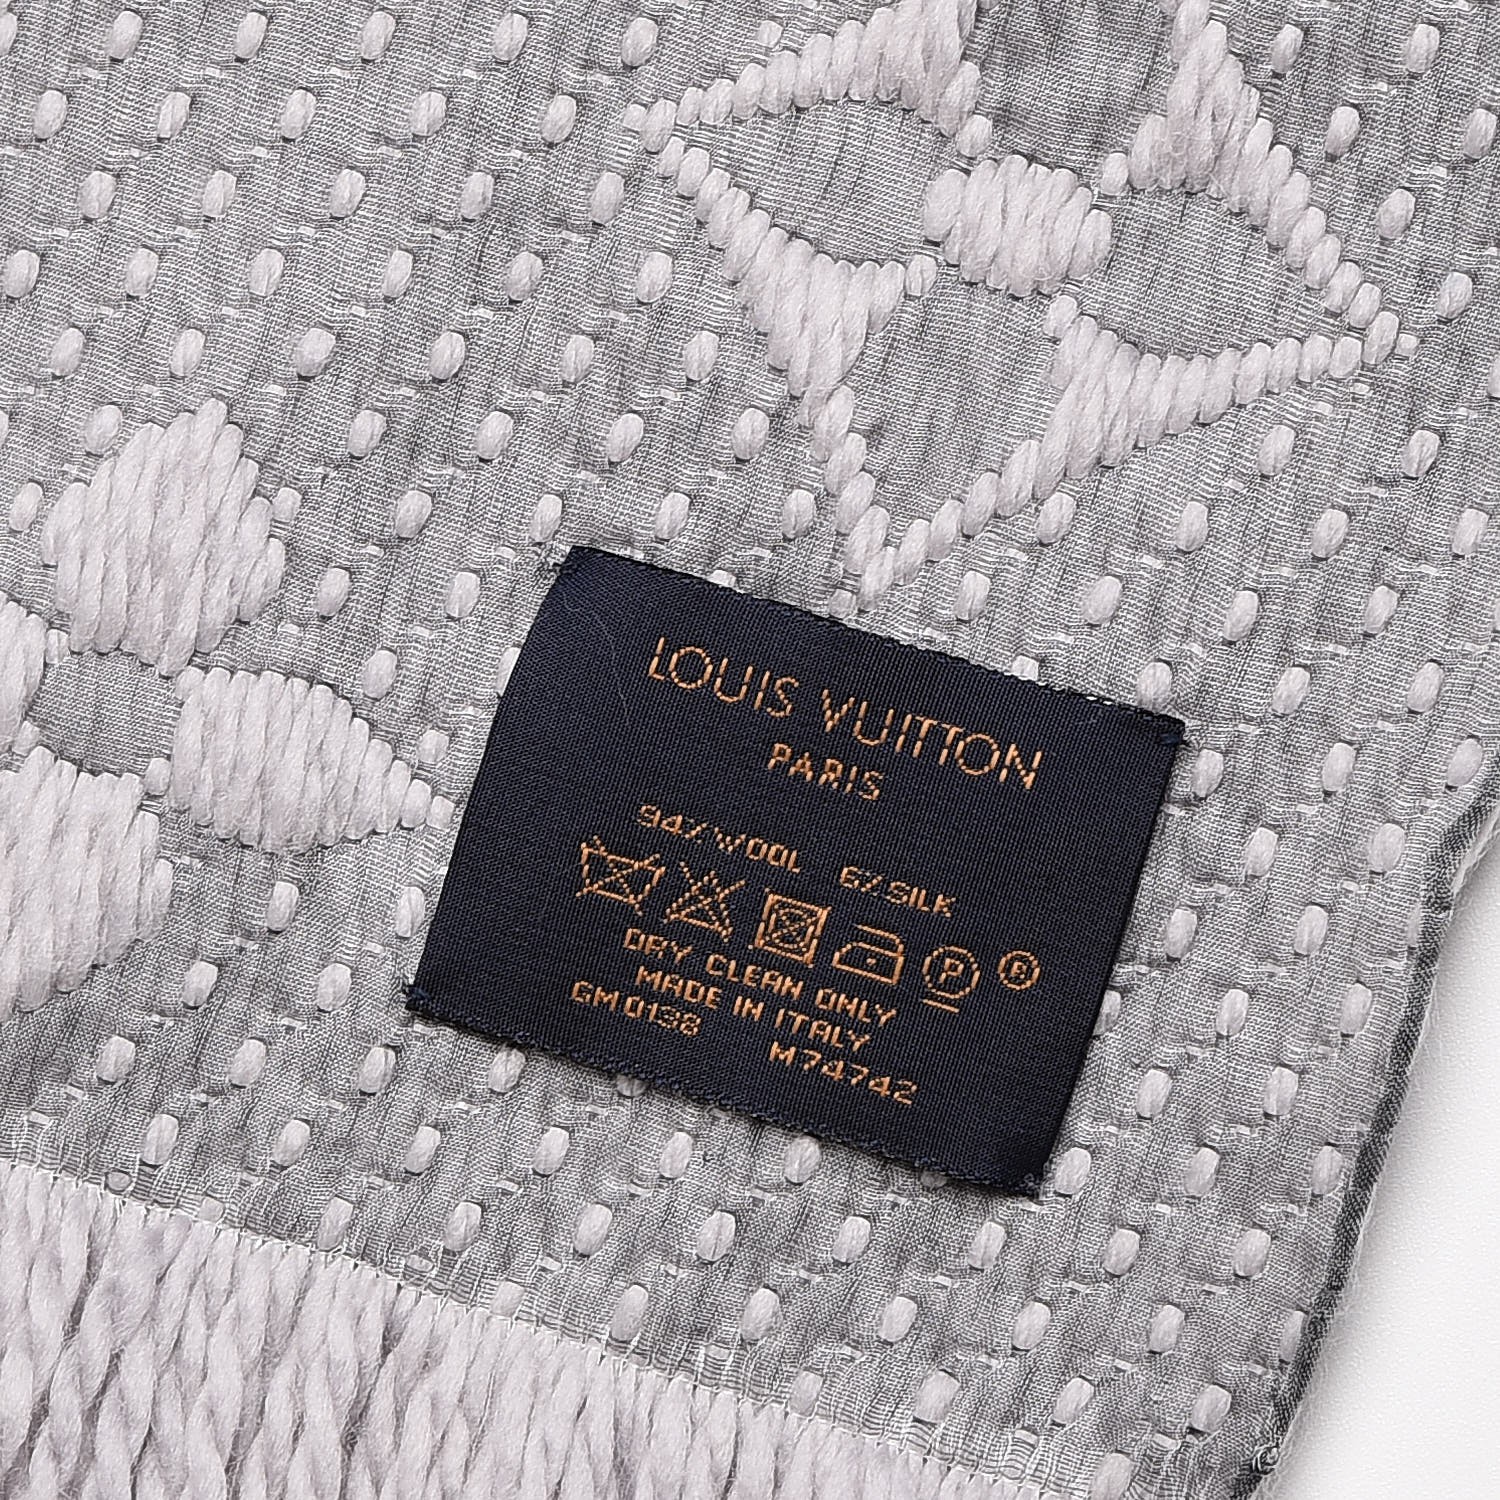 Louis Vuitton Pearl Grey Logomania Silk Wool Scarf Louis Vuitton